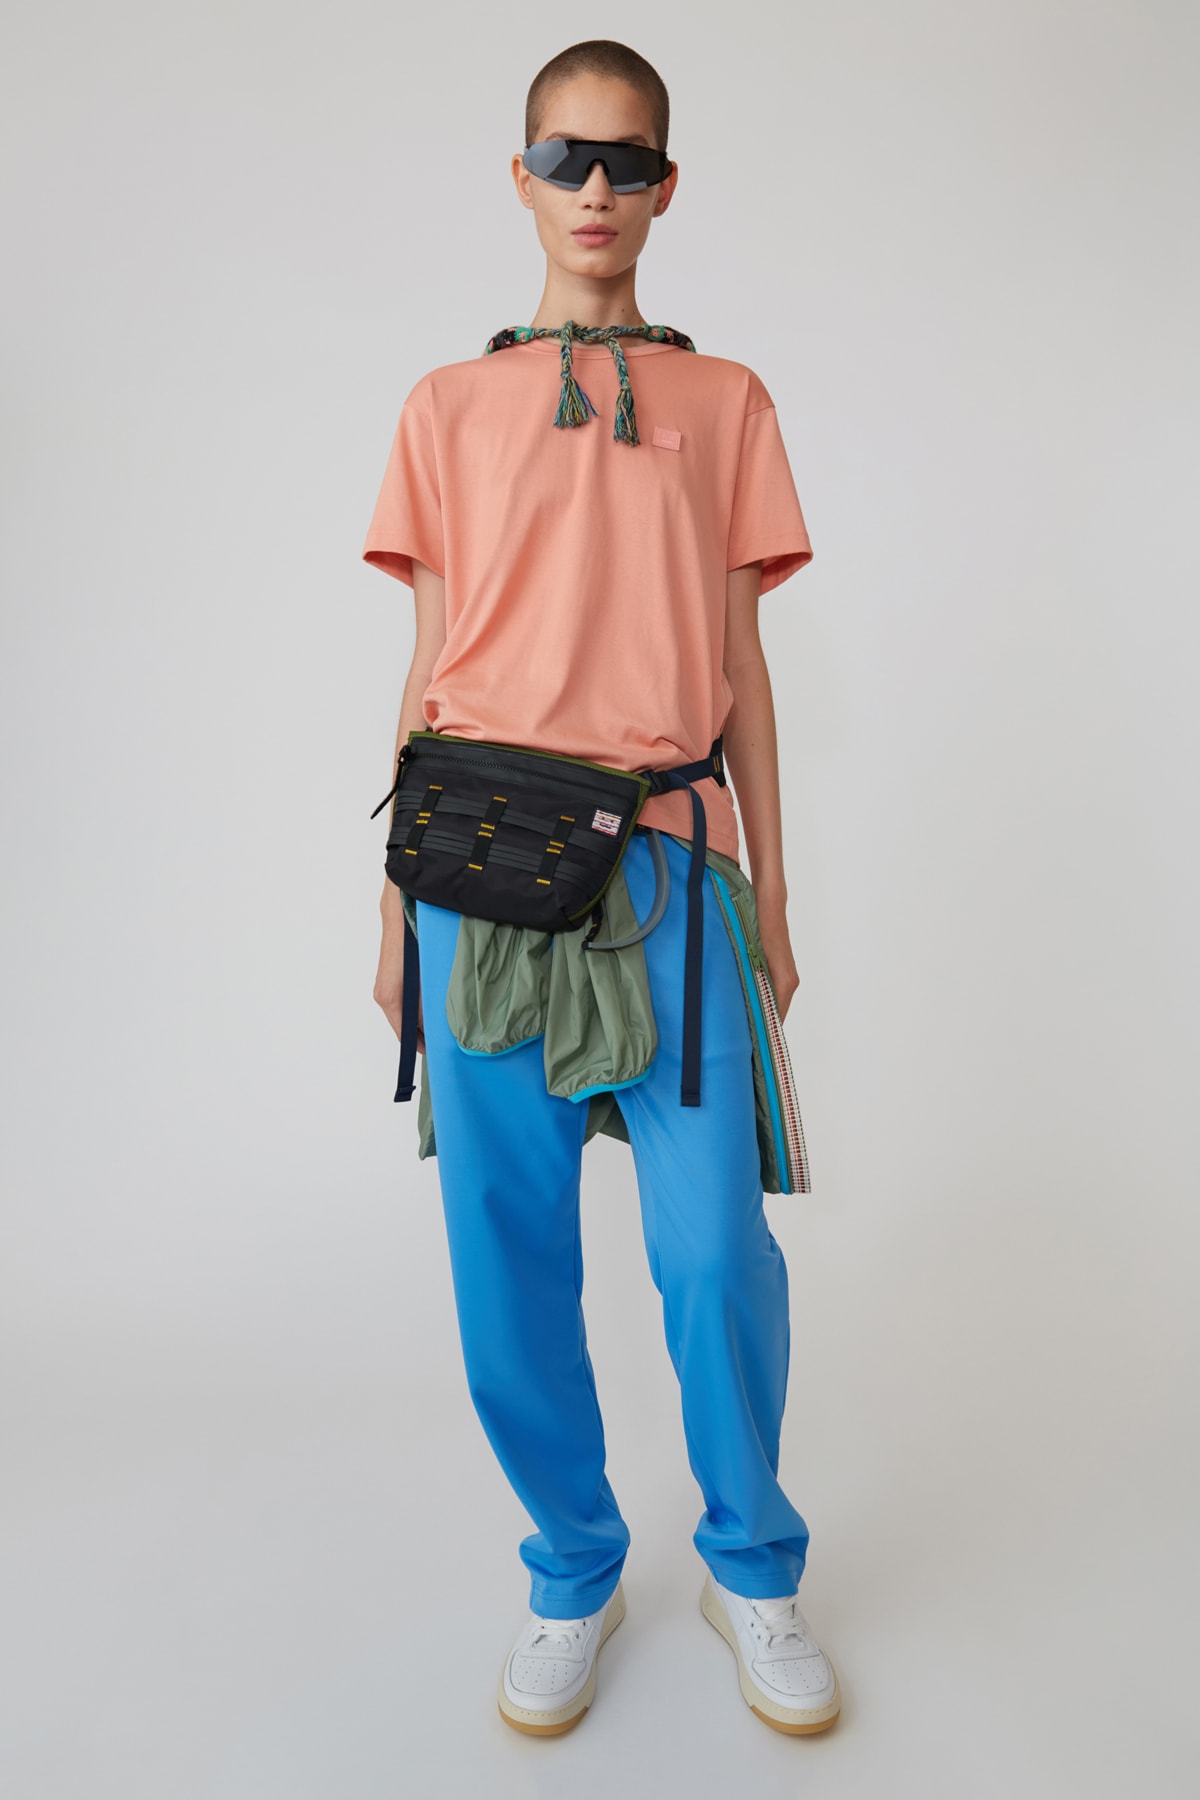 Acne Studios Spring/Summer 2019 Face Collection Shirt Orange Pants Blue